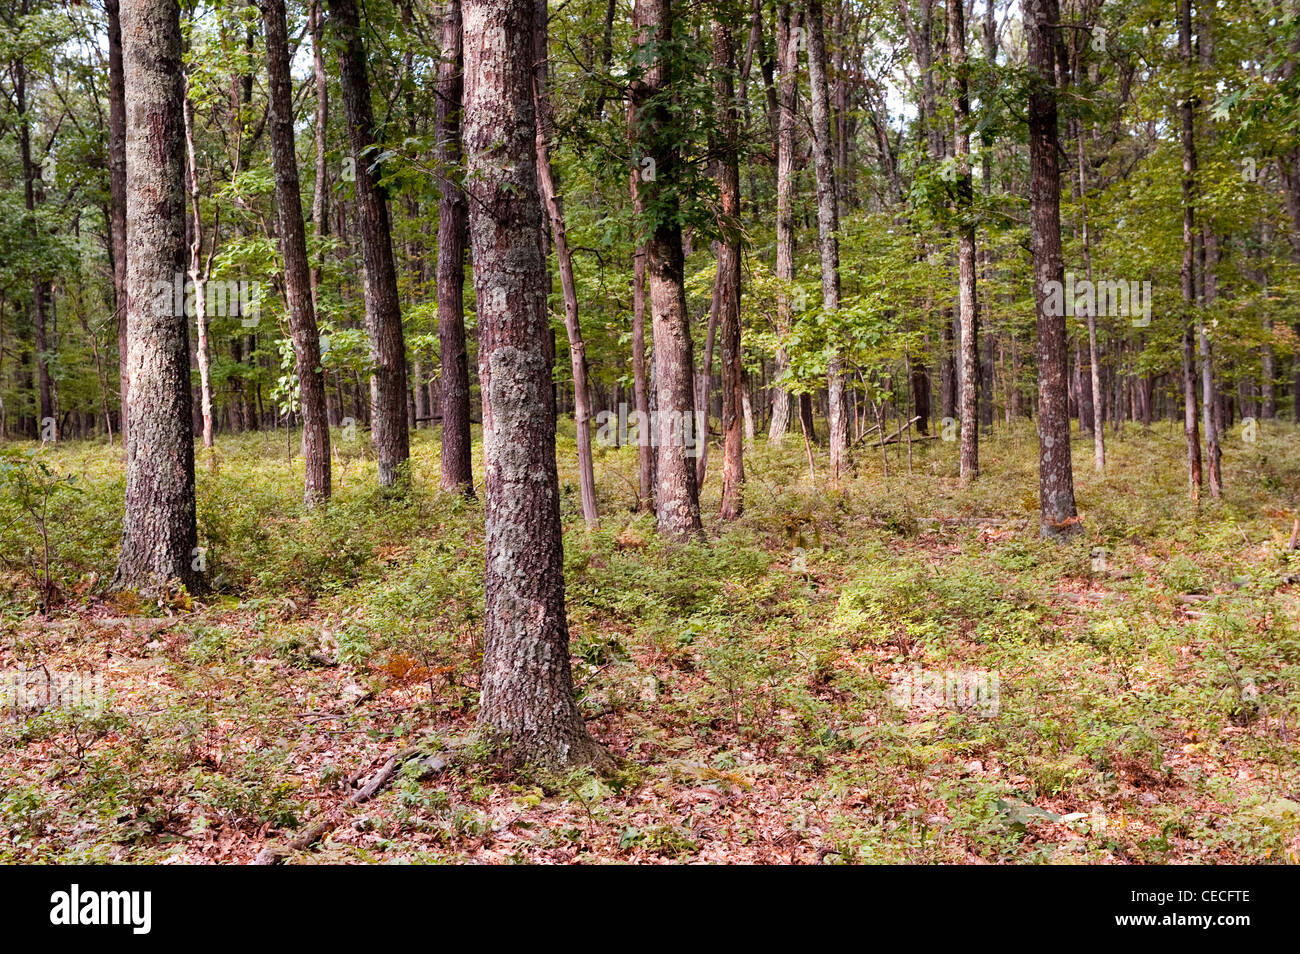 Deciduous woodland habitat in the Ponocos area of Pennsylvania, USA. Stock Photo